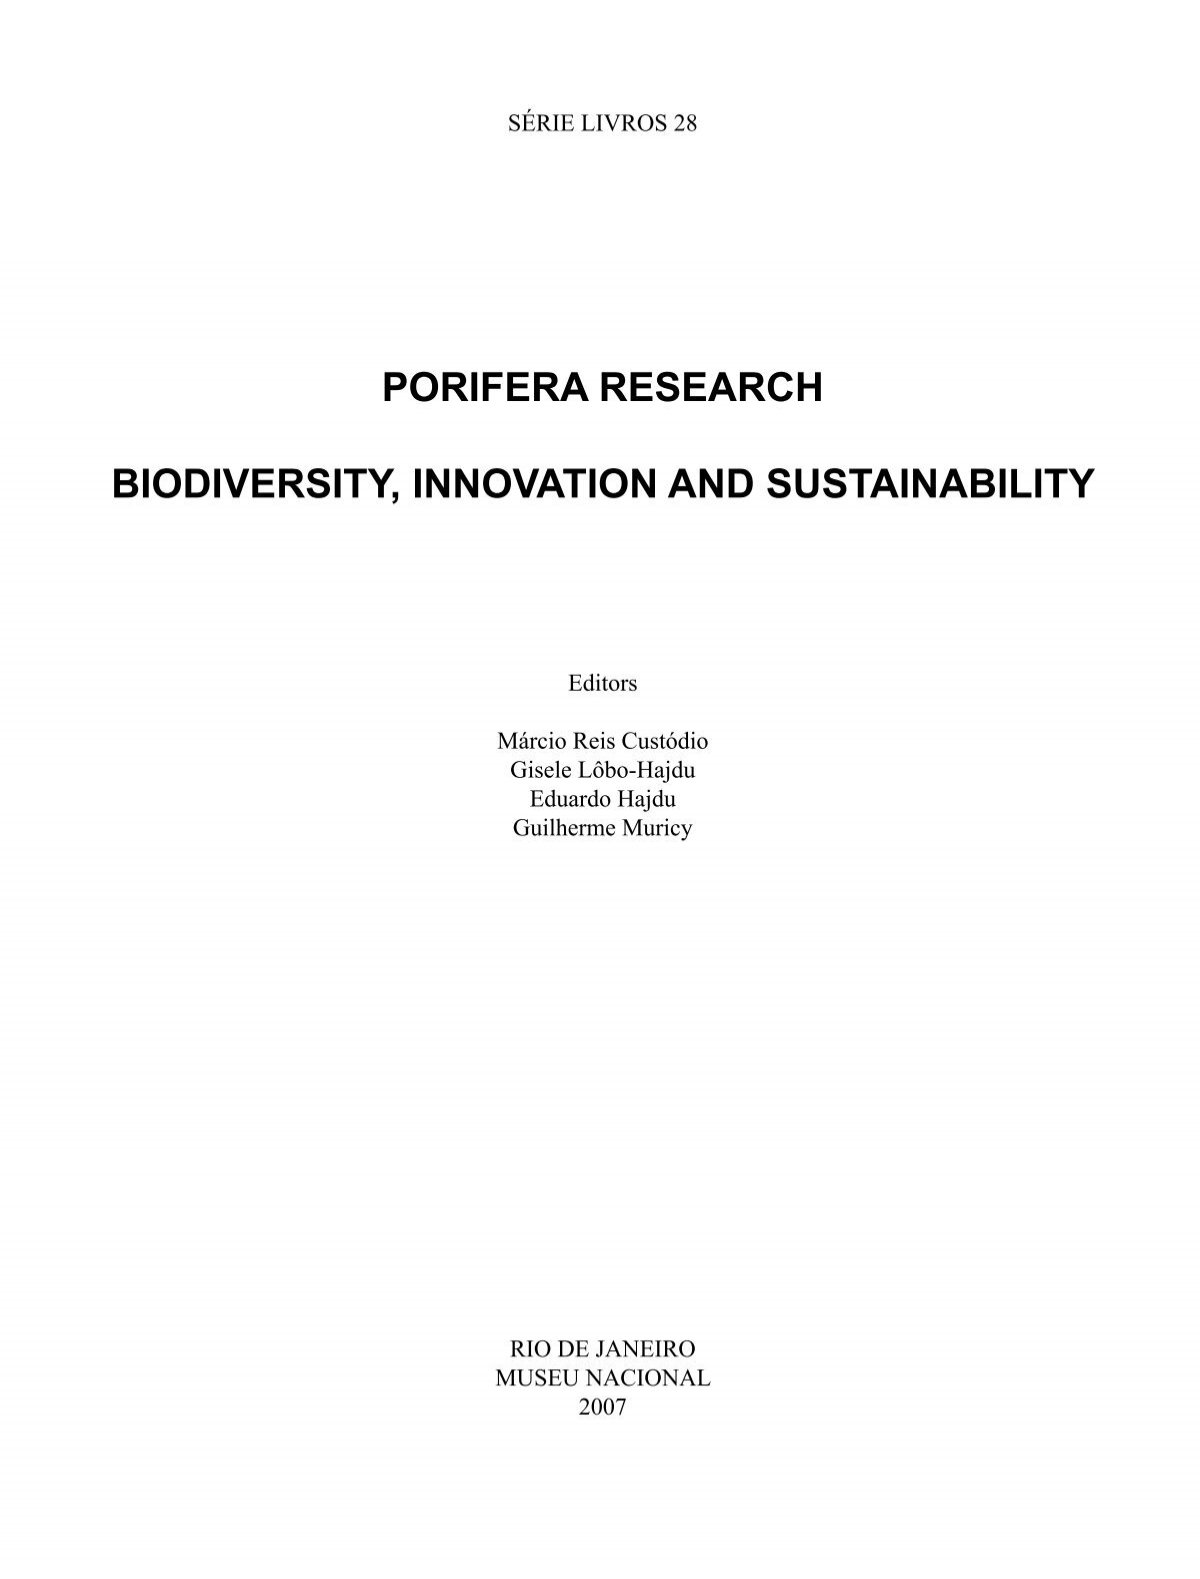 7thISS - Book - Porifera Research.pdf - Porifera Brasil - UFRJ